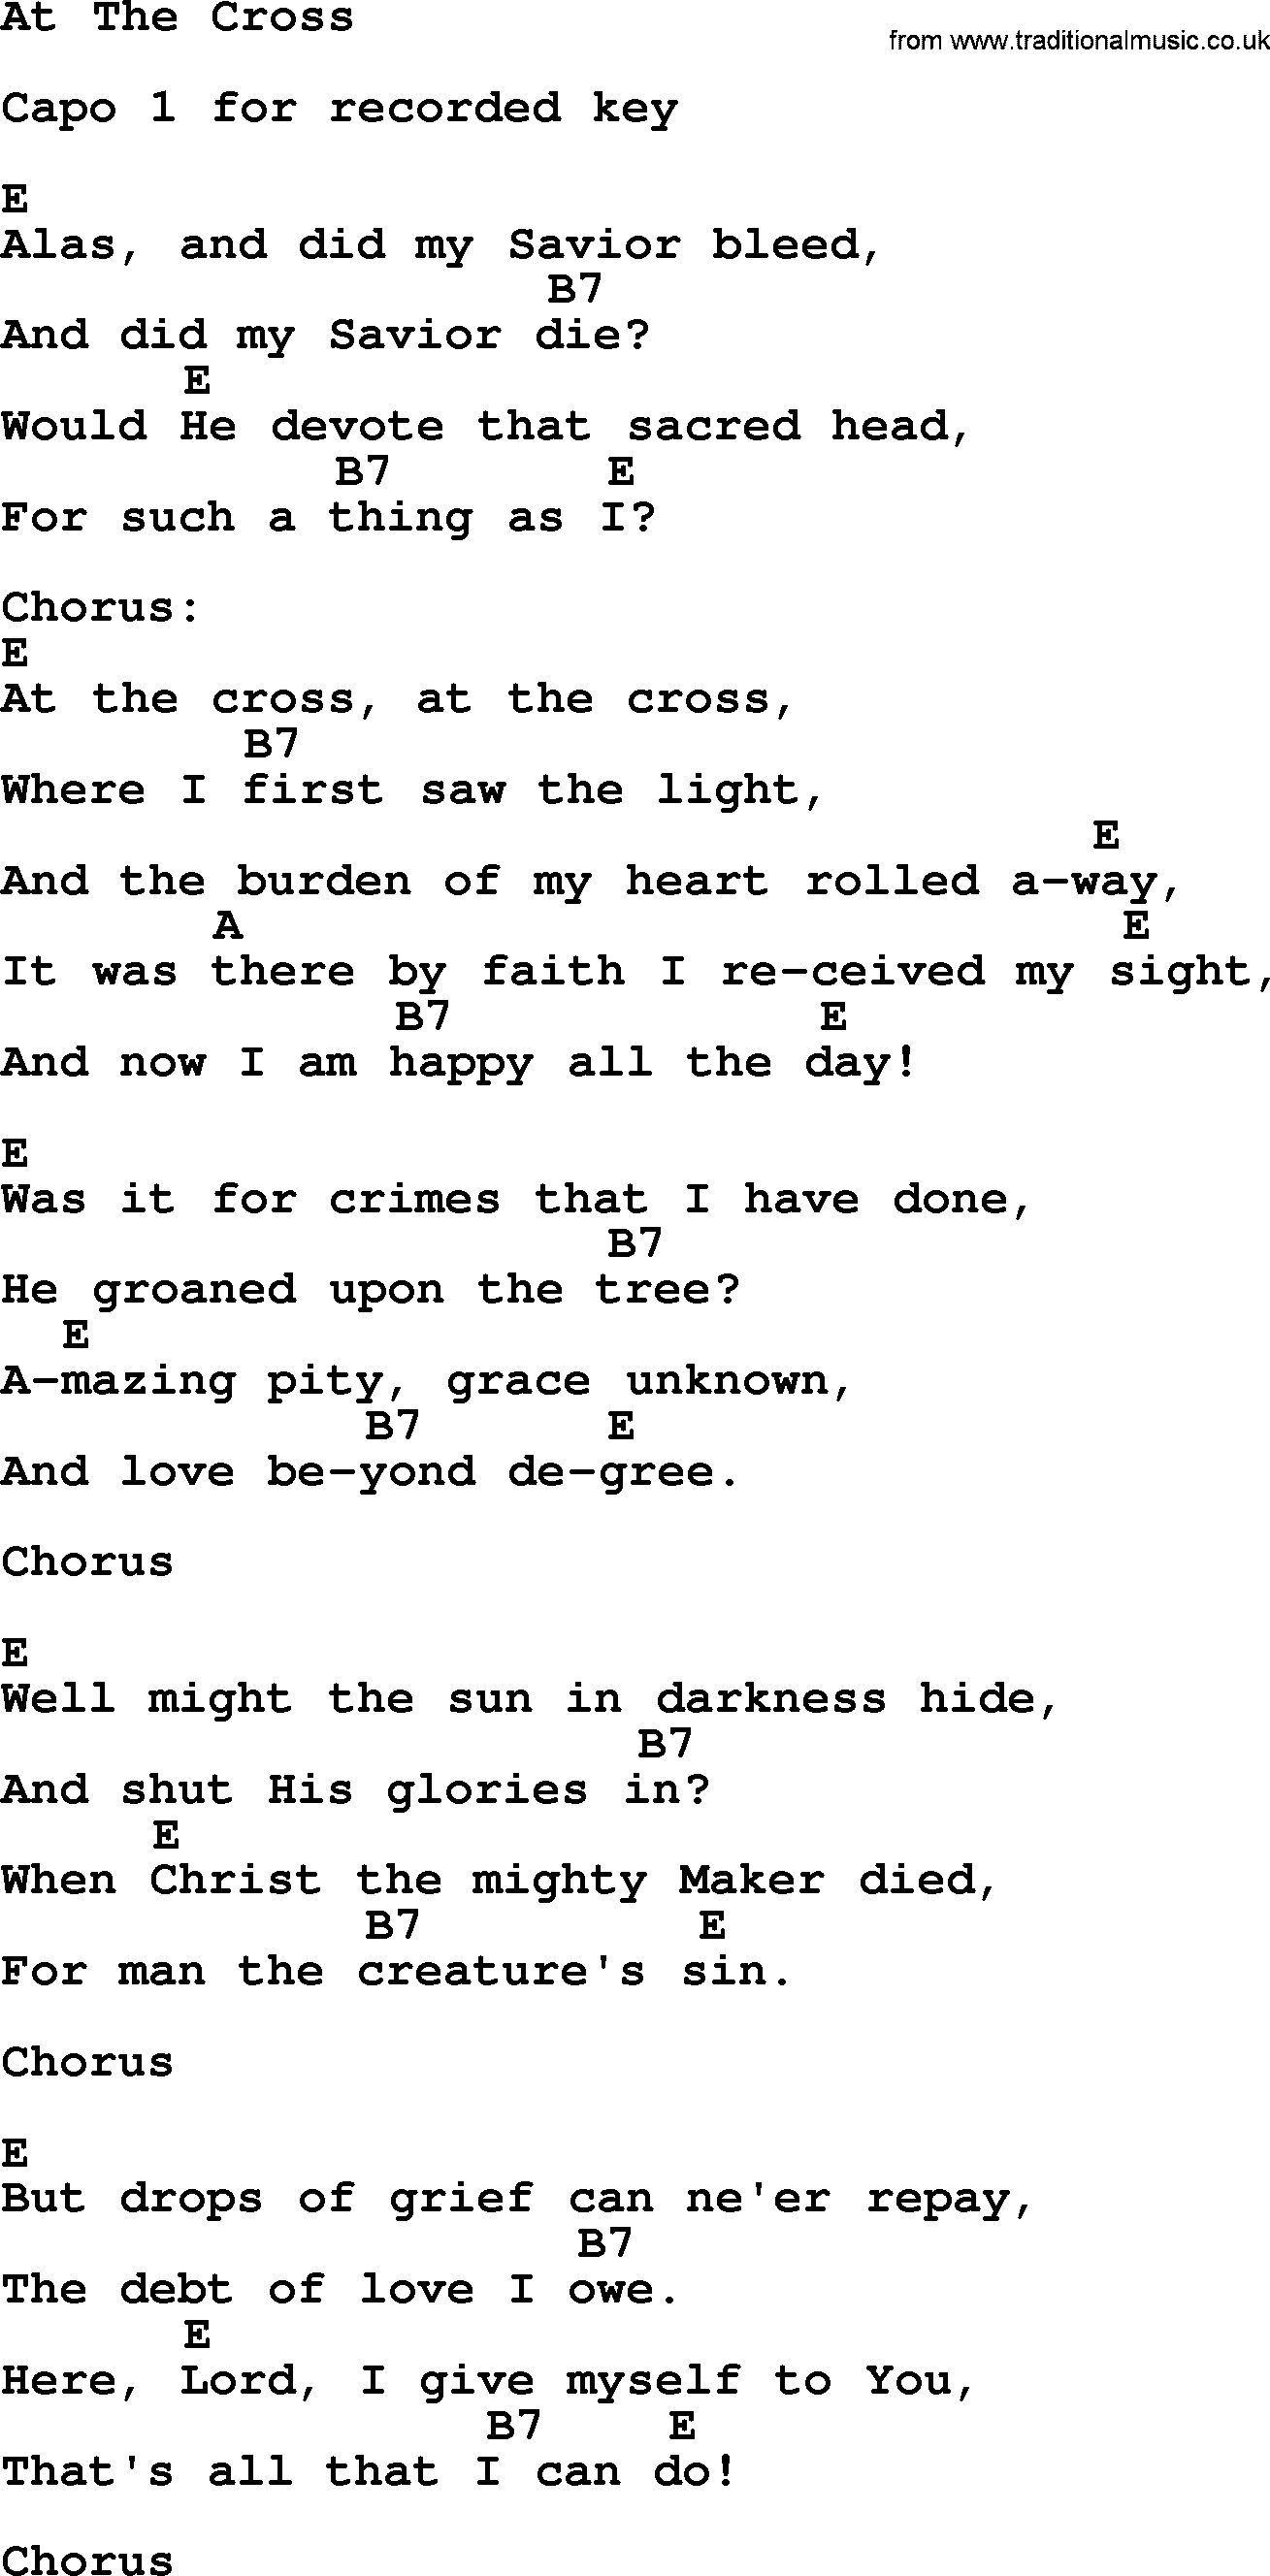 At The Cross Chords Hank Williams Song At The Cross Lyrics And Chords